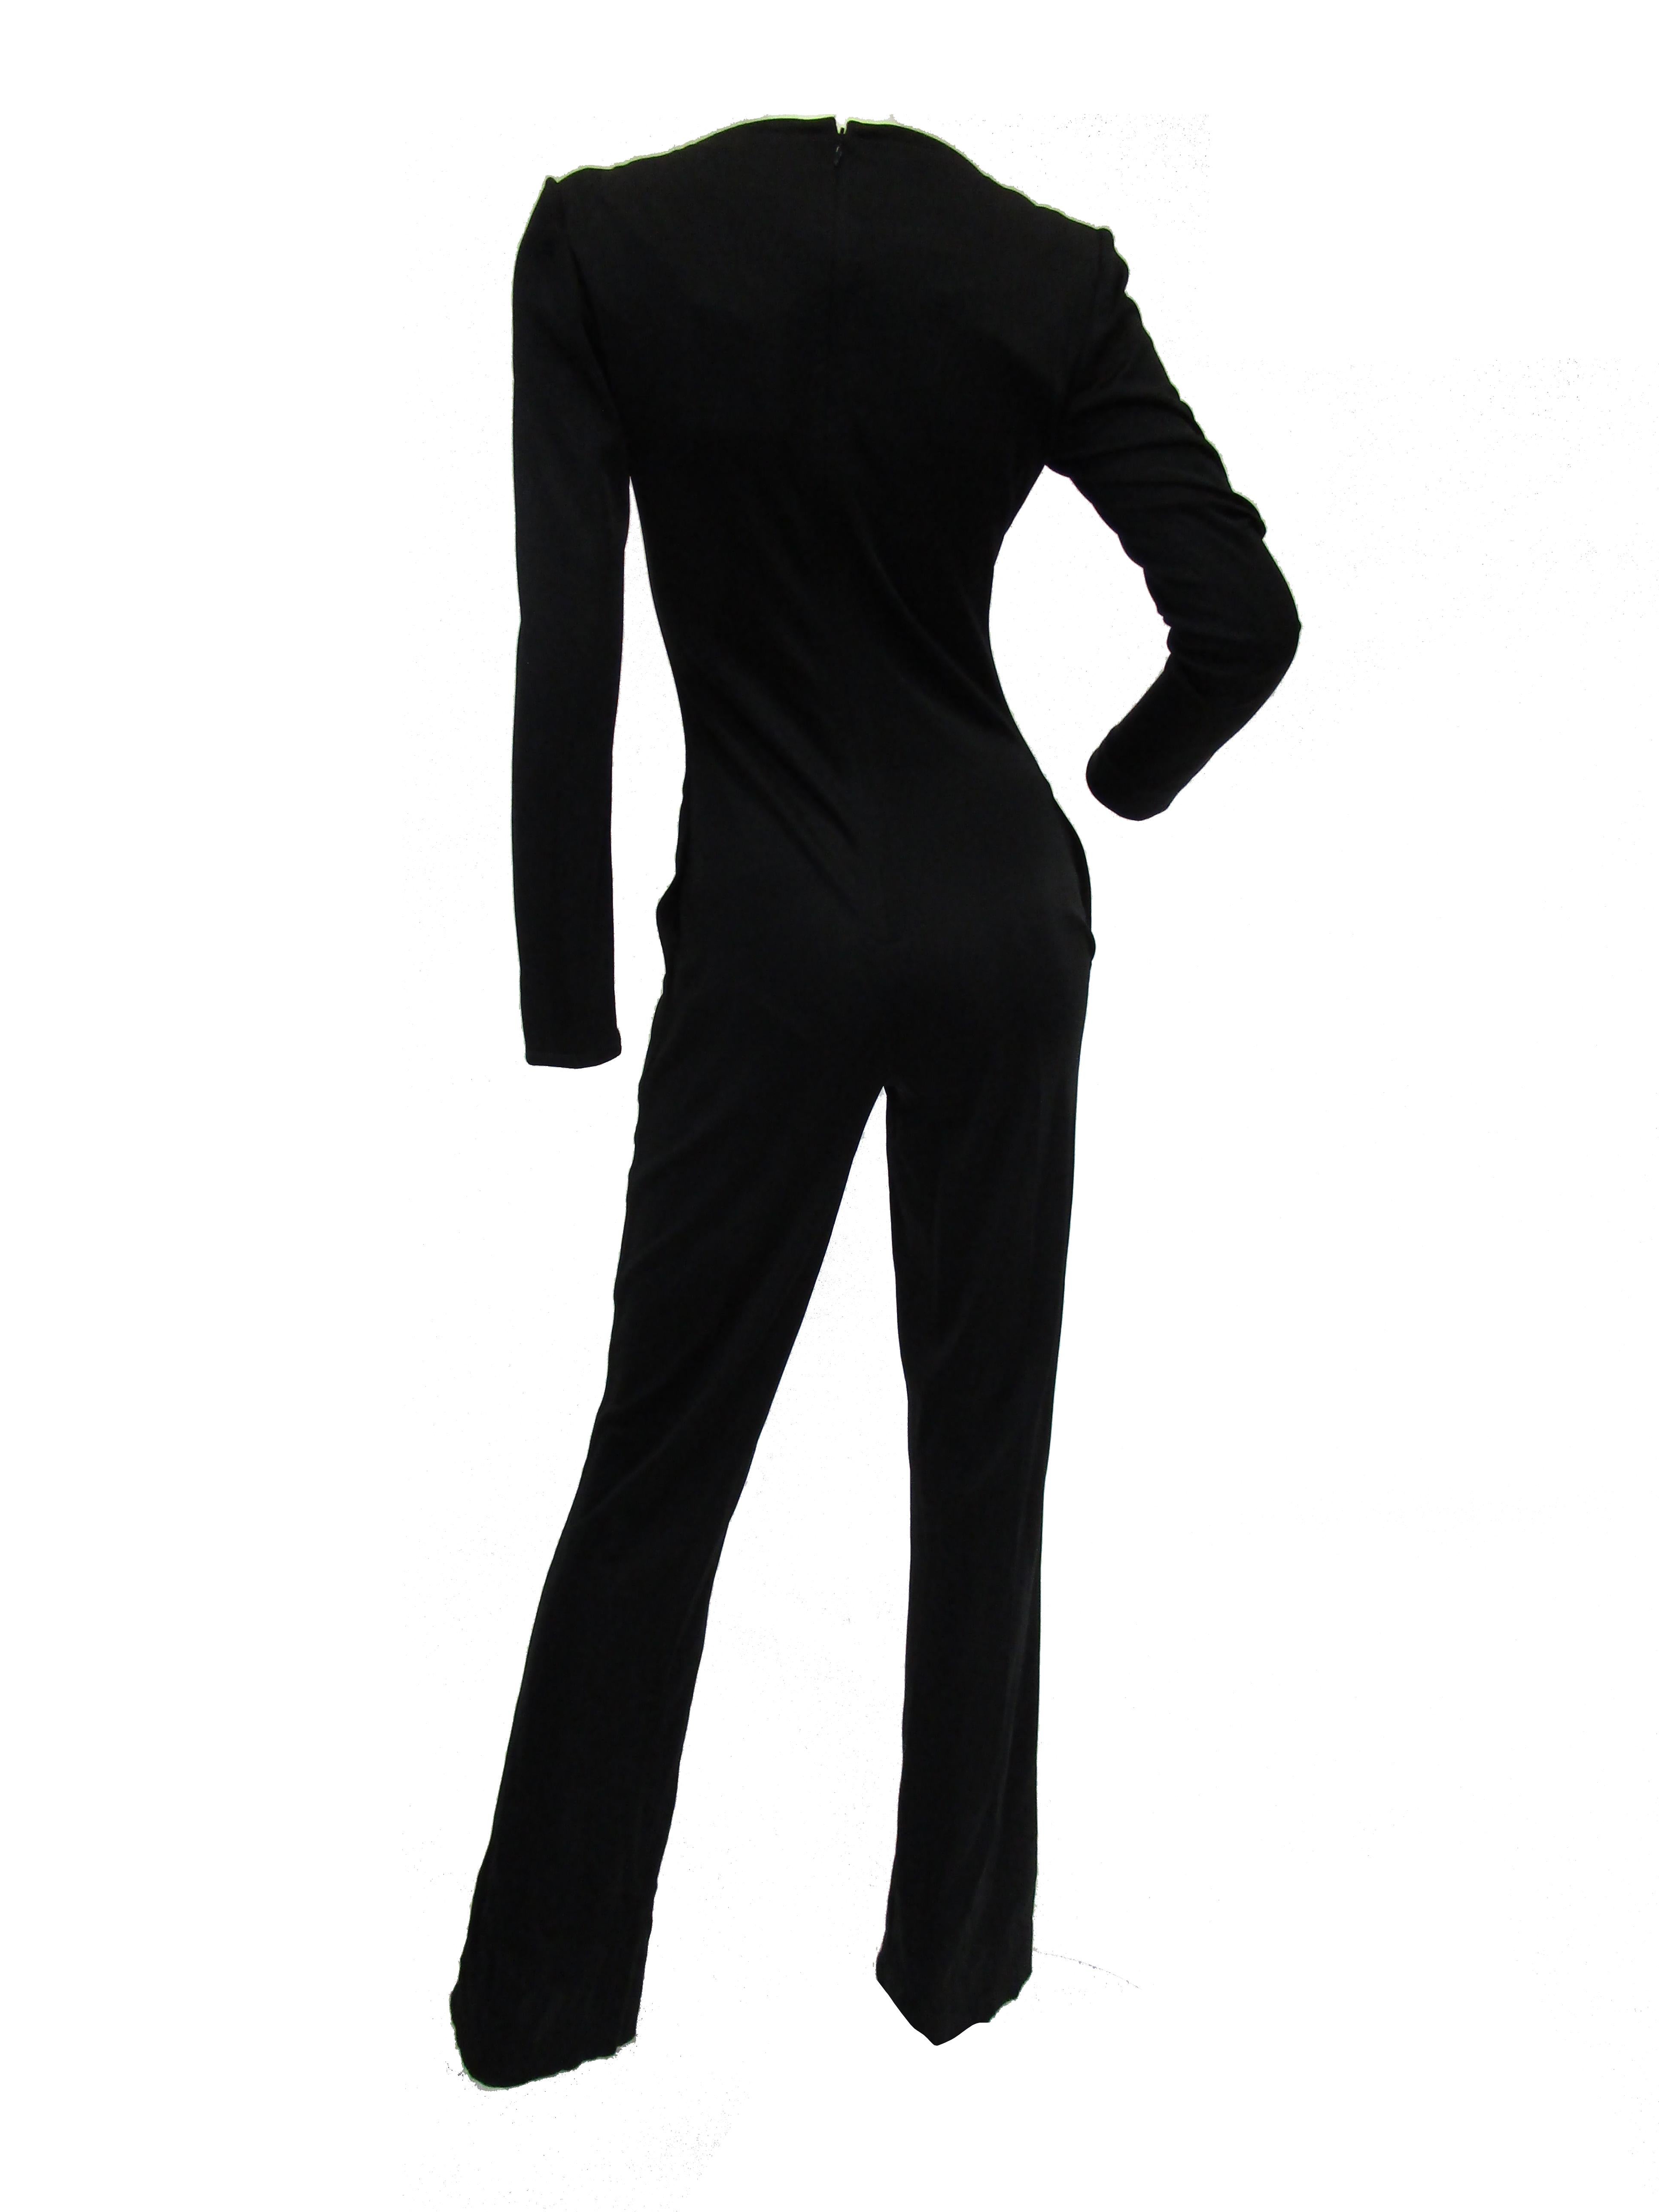 Women's 1980s Yves Saint Laurent Black Jumpsuit New with Tags